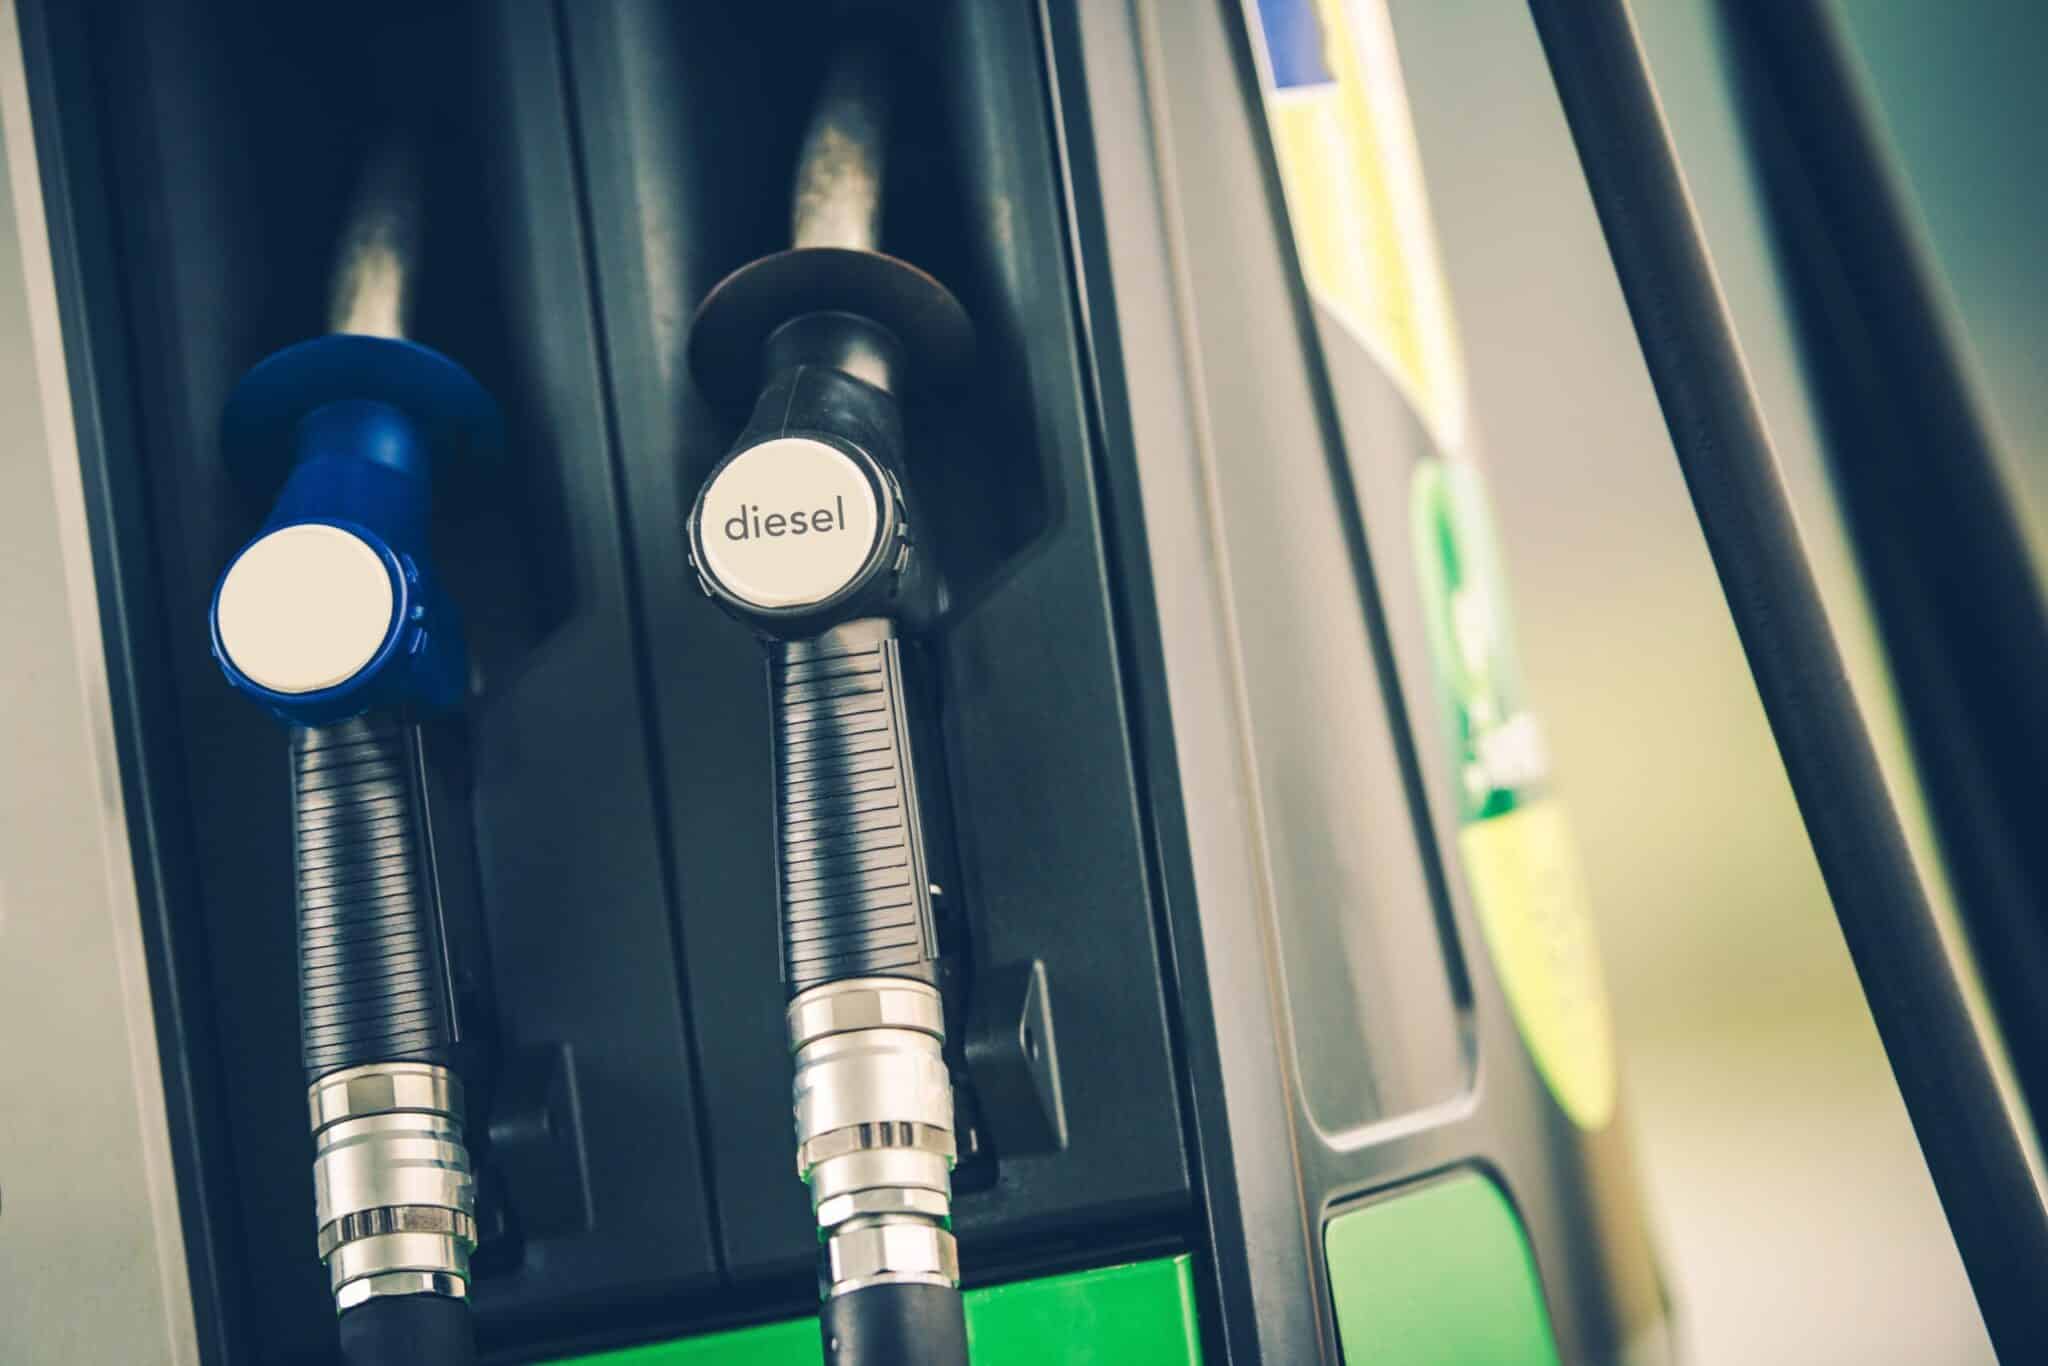 Gas Station Fuel Dispenser Closeup Photo. Car Refueling Concept Photo.